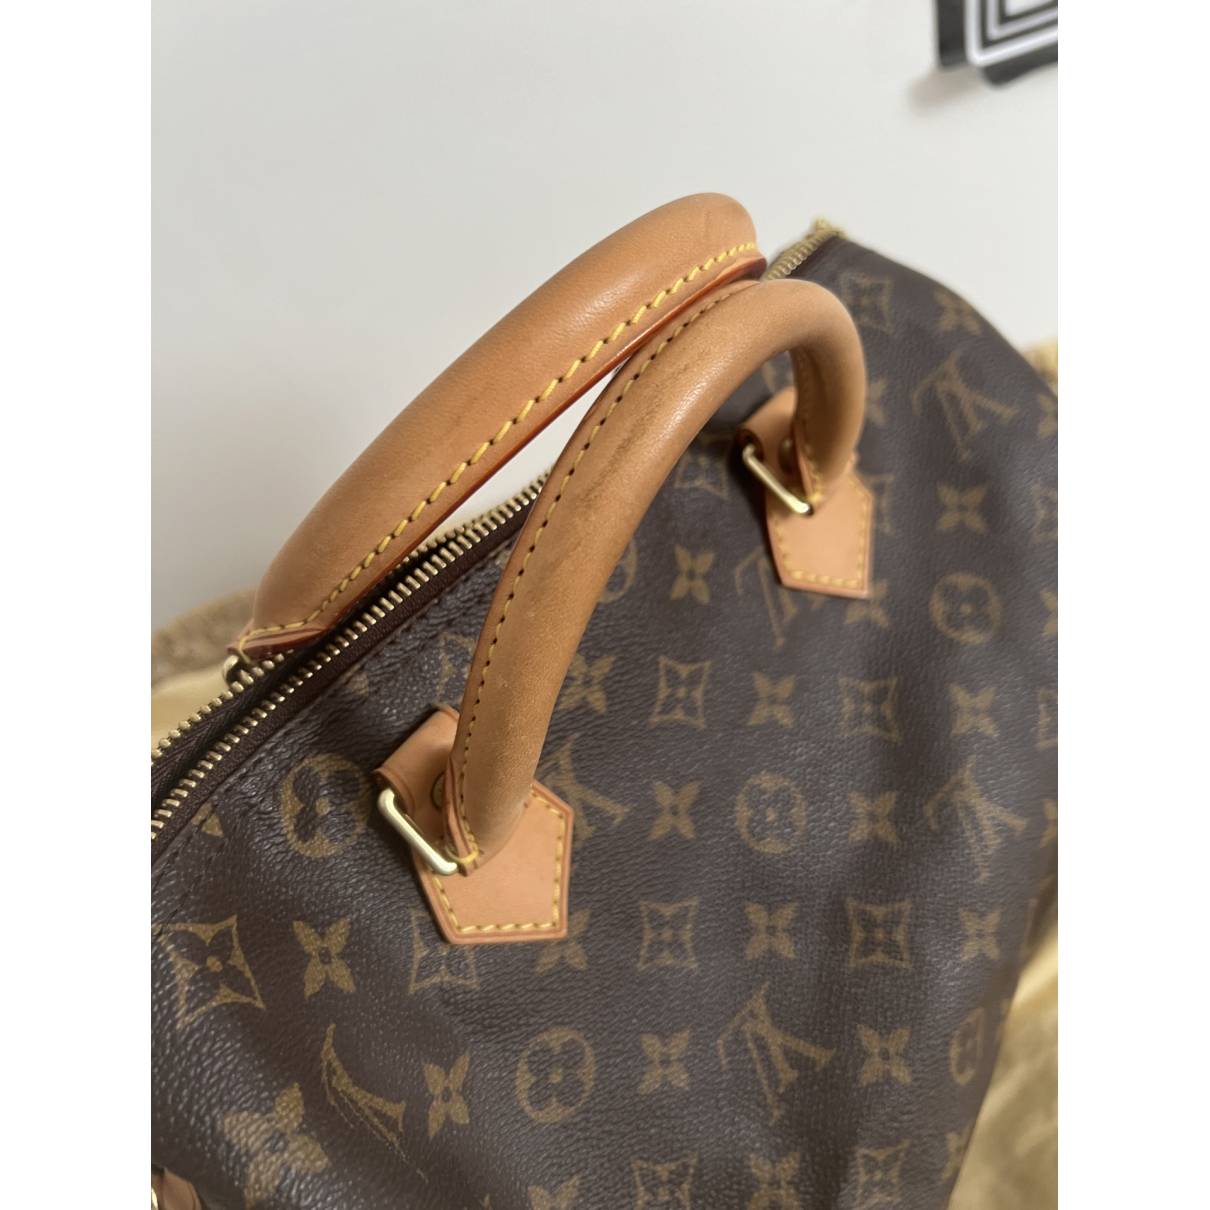 Louis Vuitton - Authenticated Speedy Handbag - Tweed Brown for Women, Never Worn